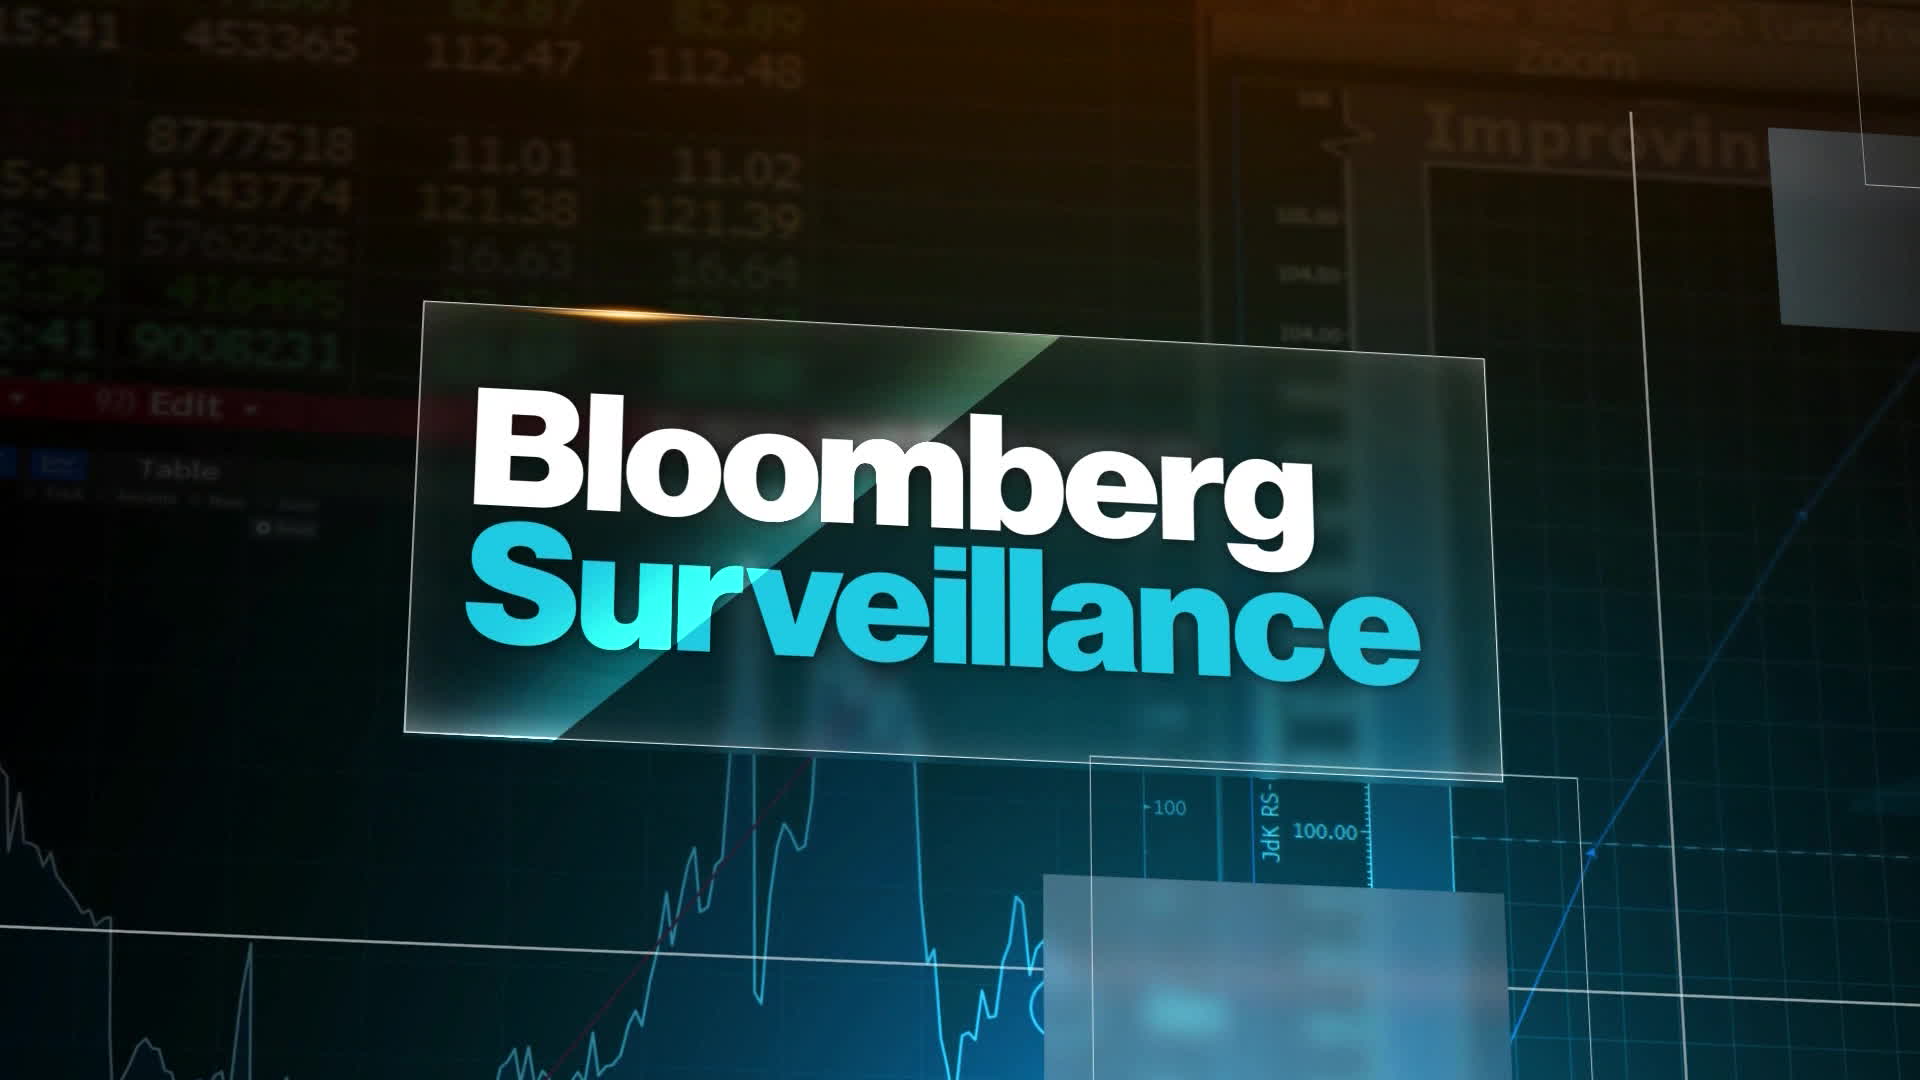 'Bloomberg Surveillance Simulcast' Full Show 8/11/2022